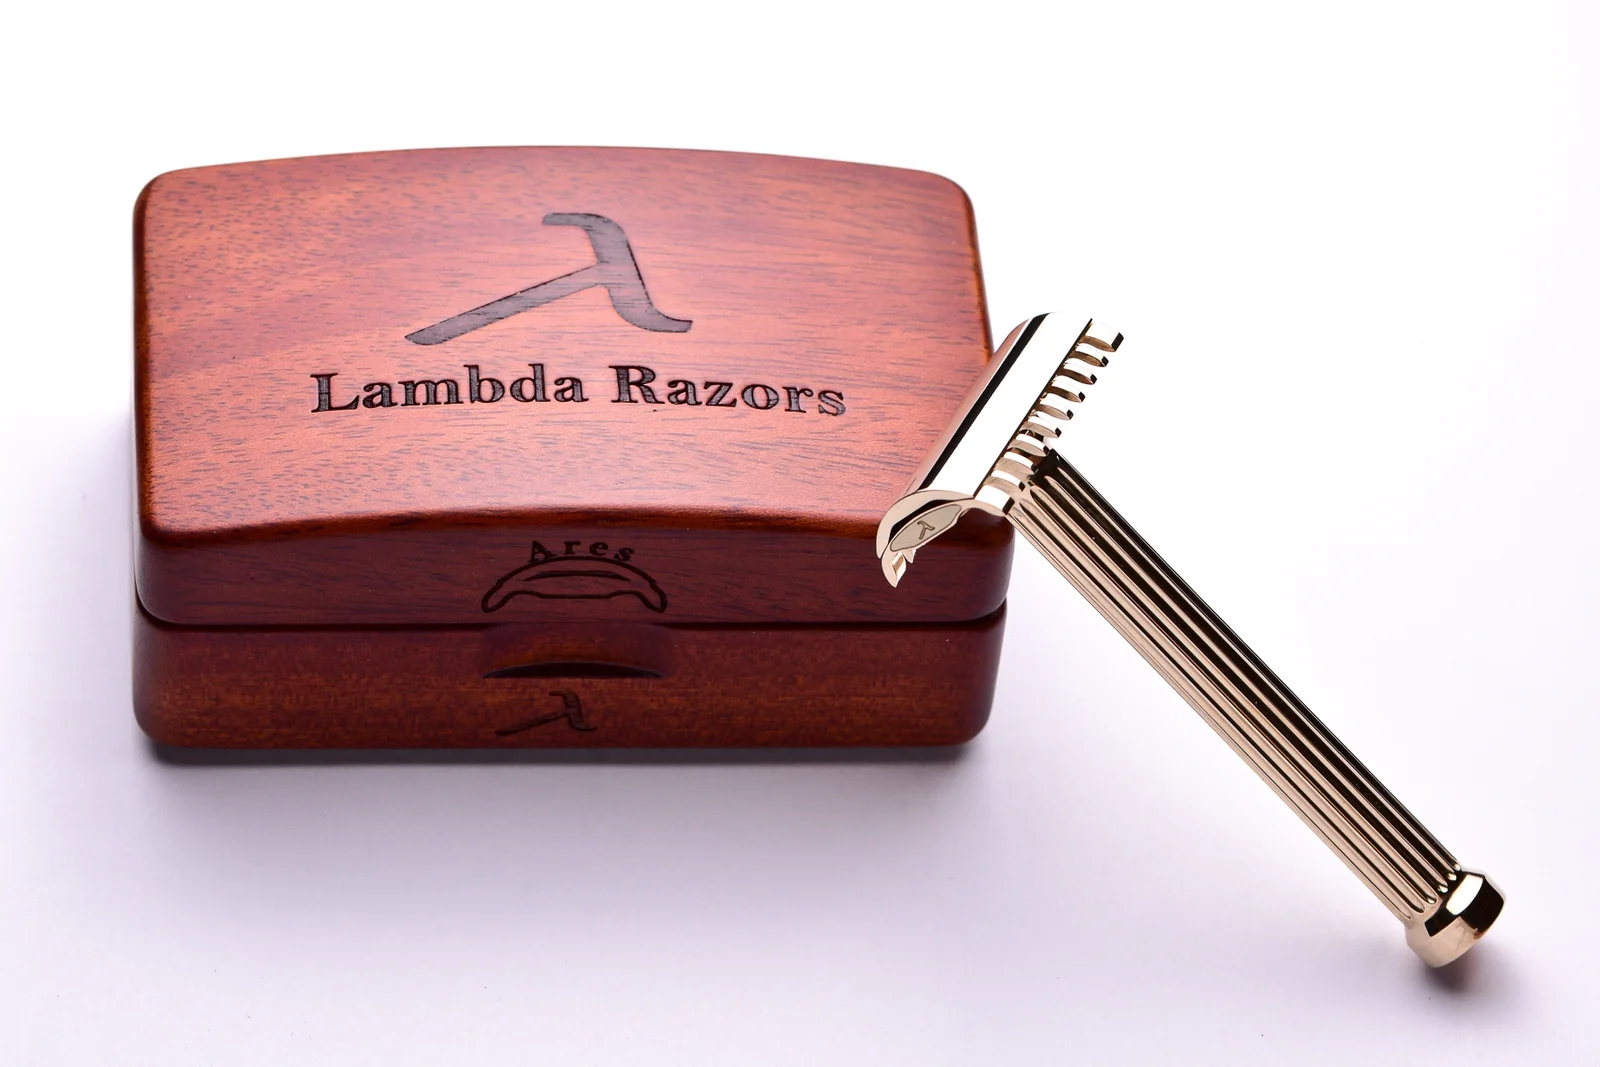 Lambda Razors - Premium Quality Safety Razors